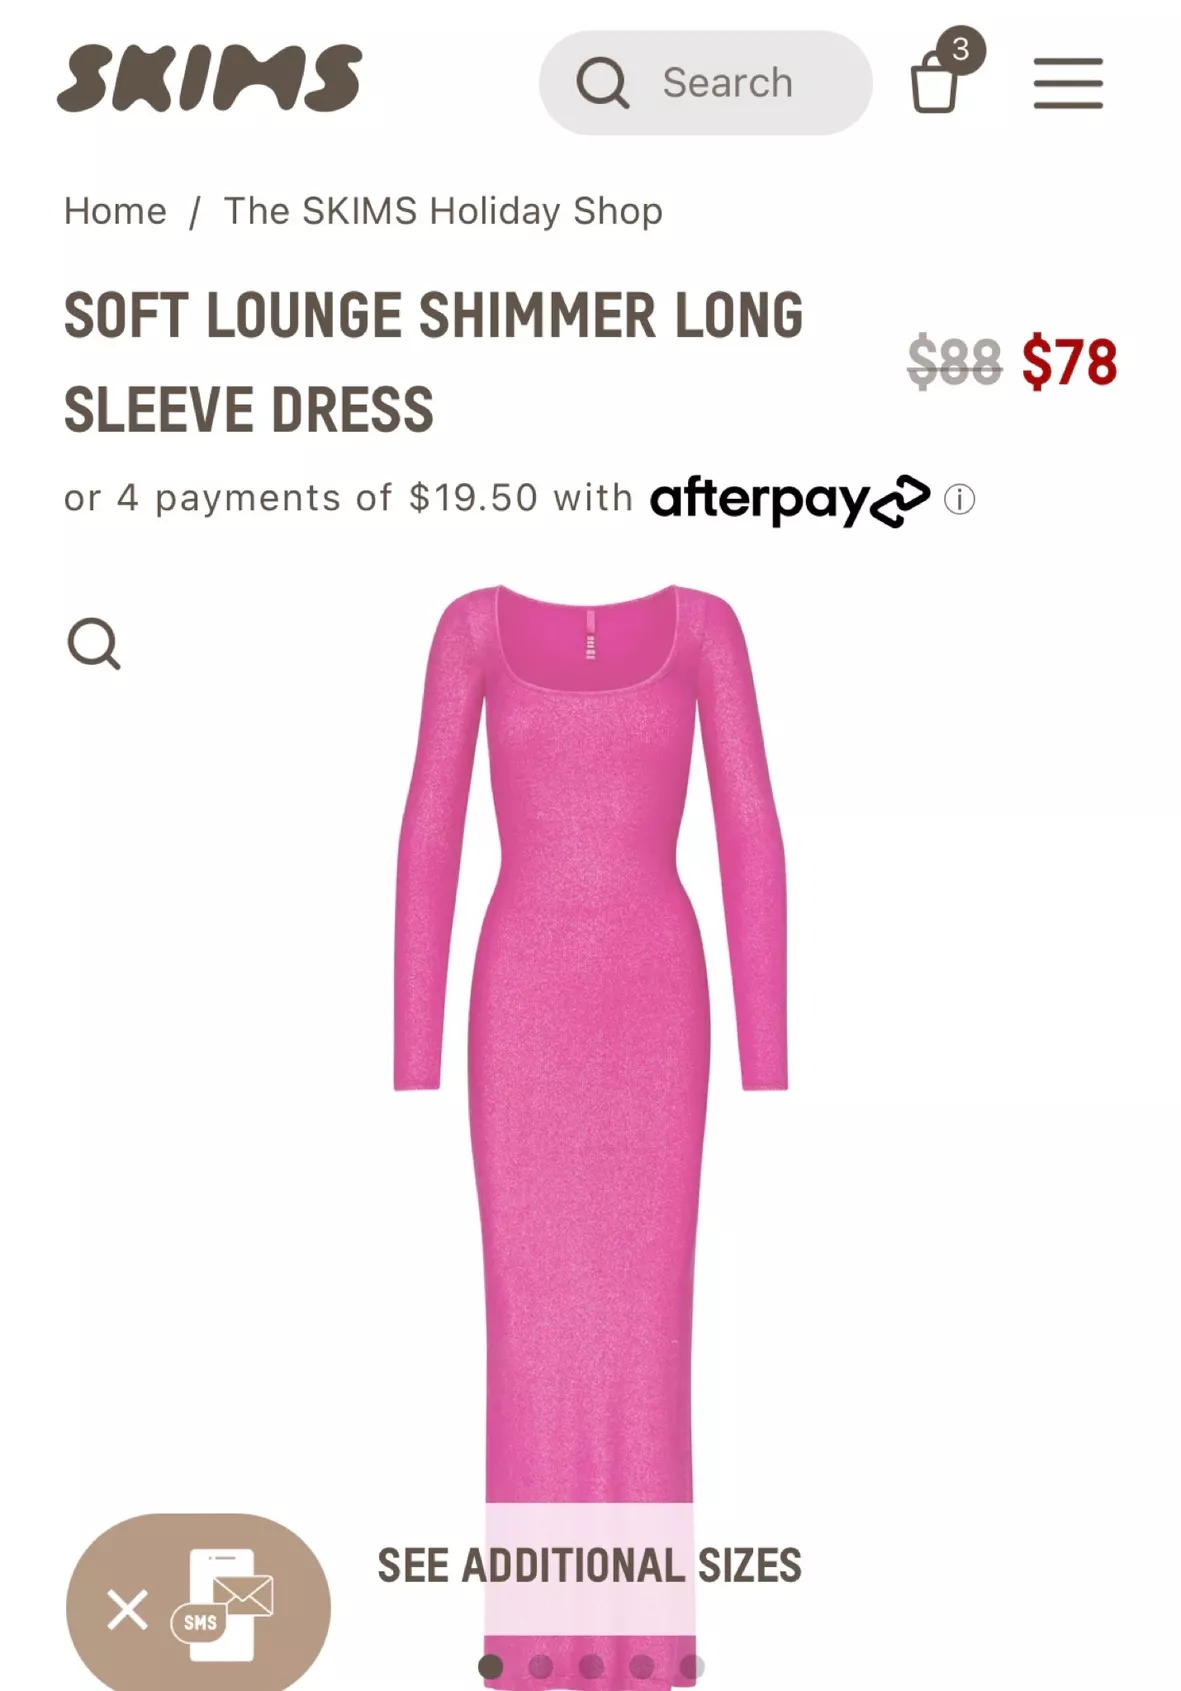 Soft Lounge Shimmer Long Sleeve Dress